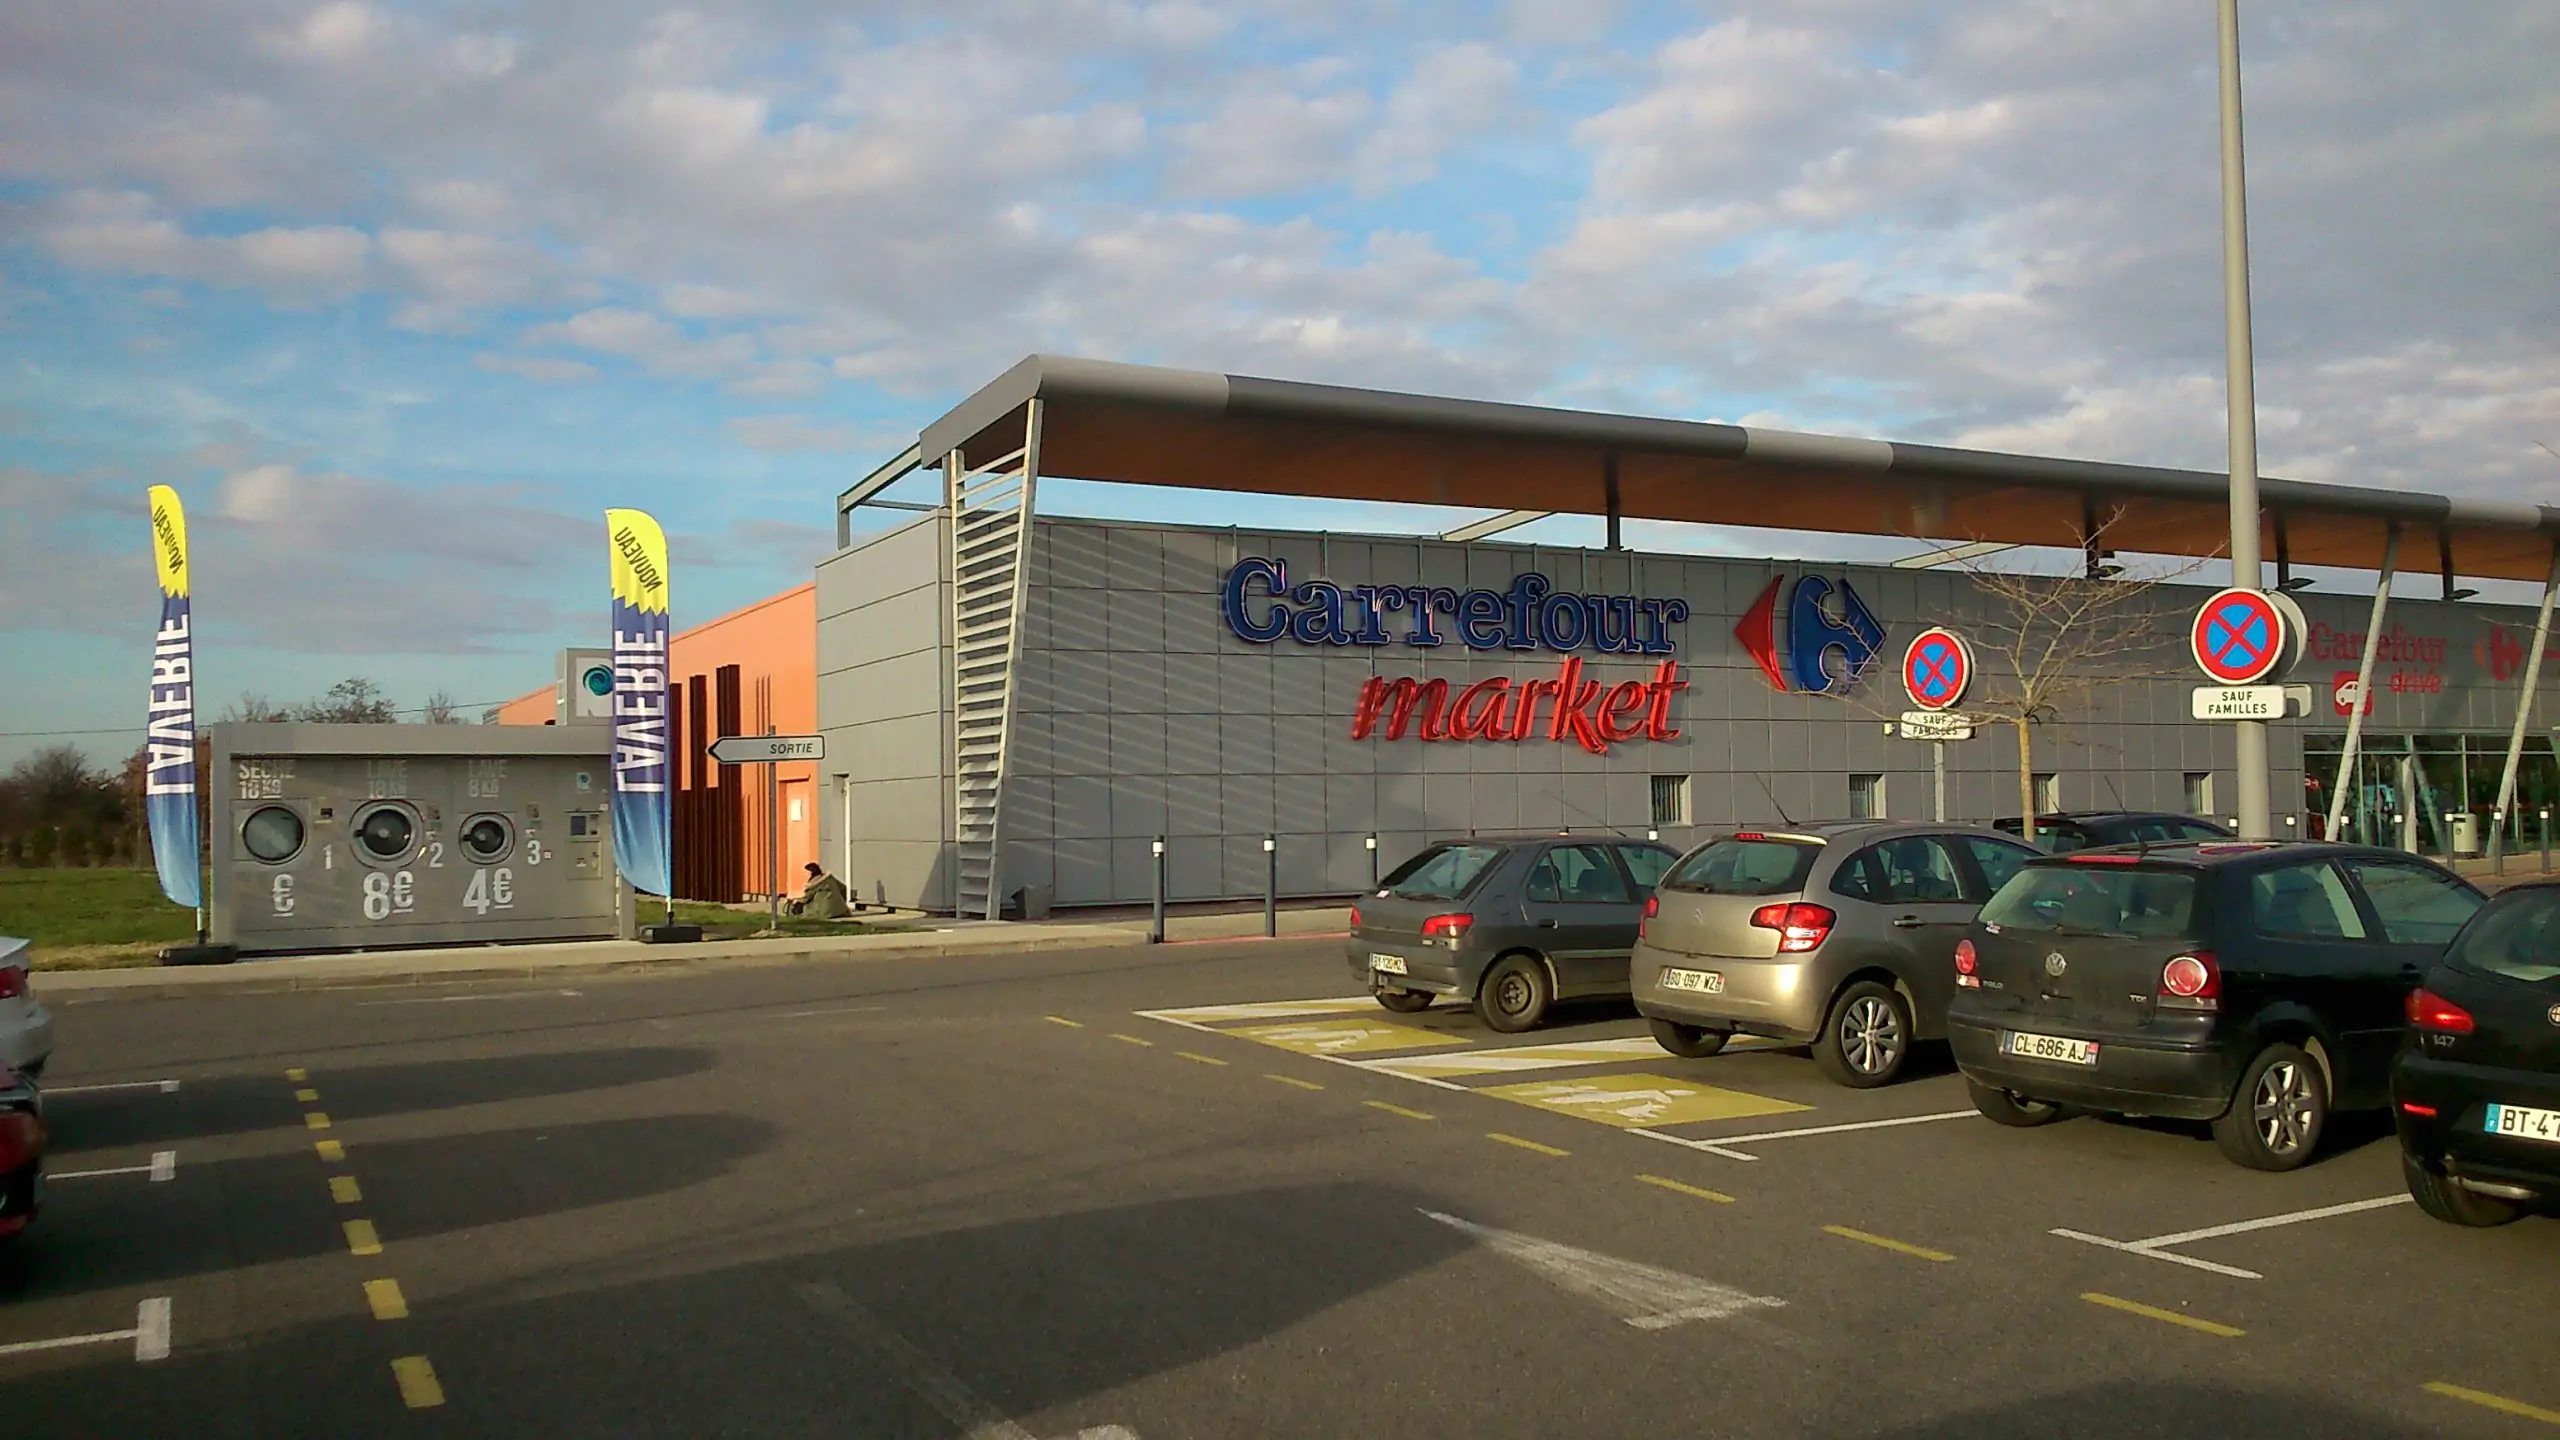 Carrefour-Market-à-Aussonne-scaled.jpg